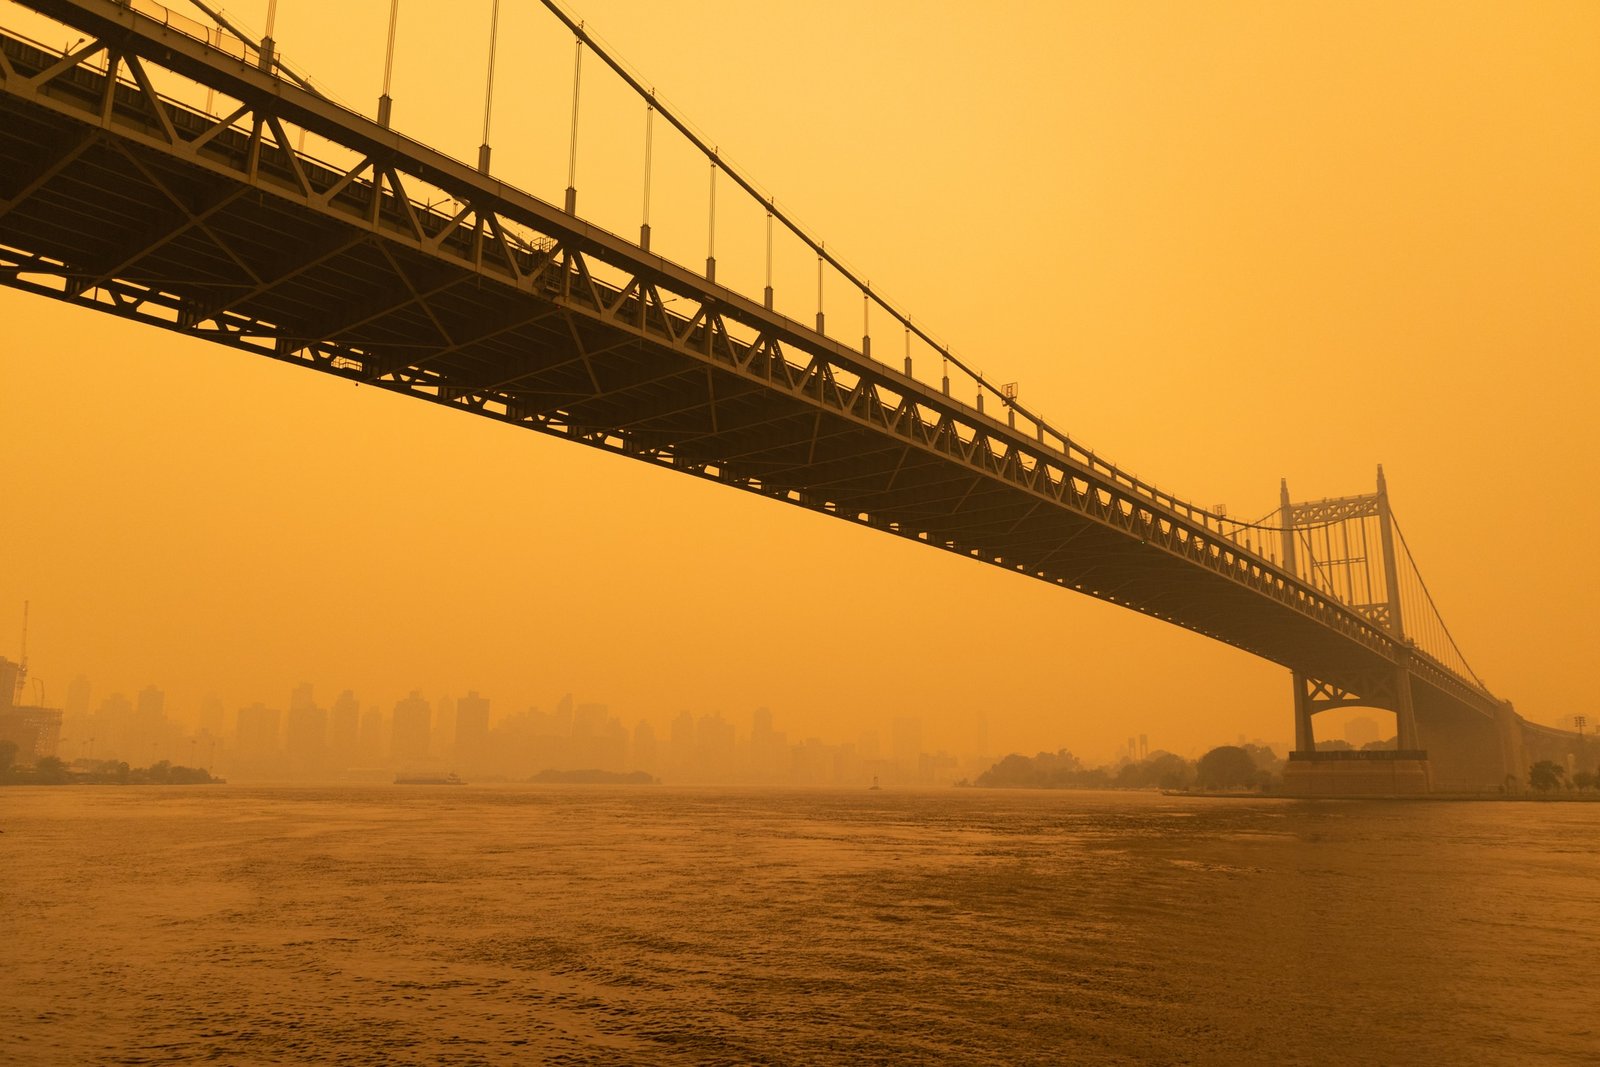 The orange New York skyline does not make for a pretty Instagram photo